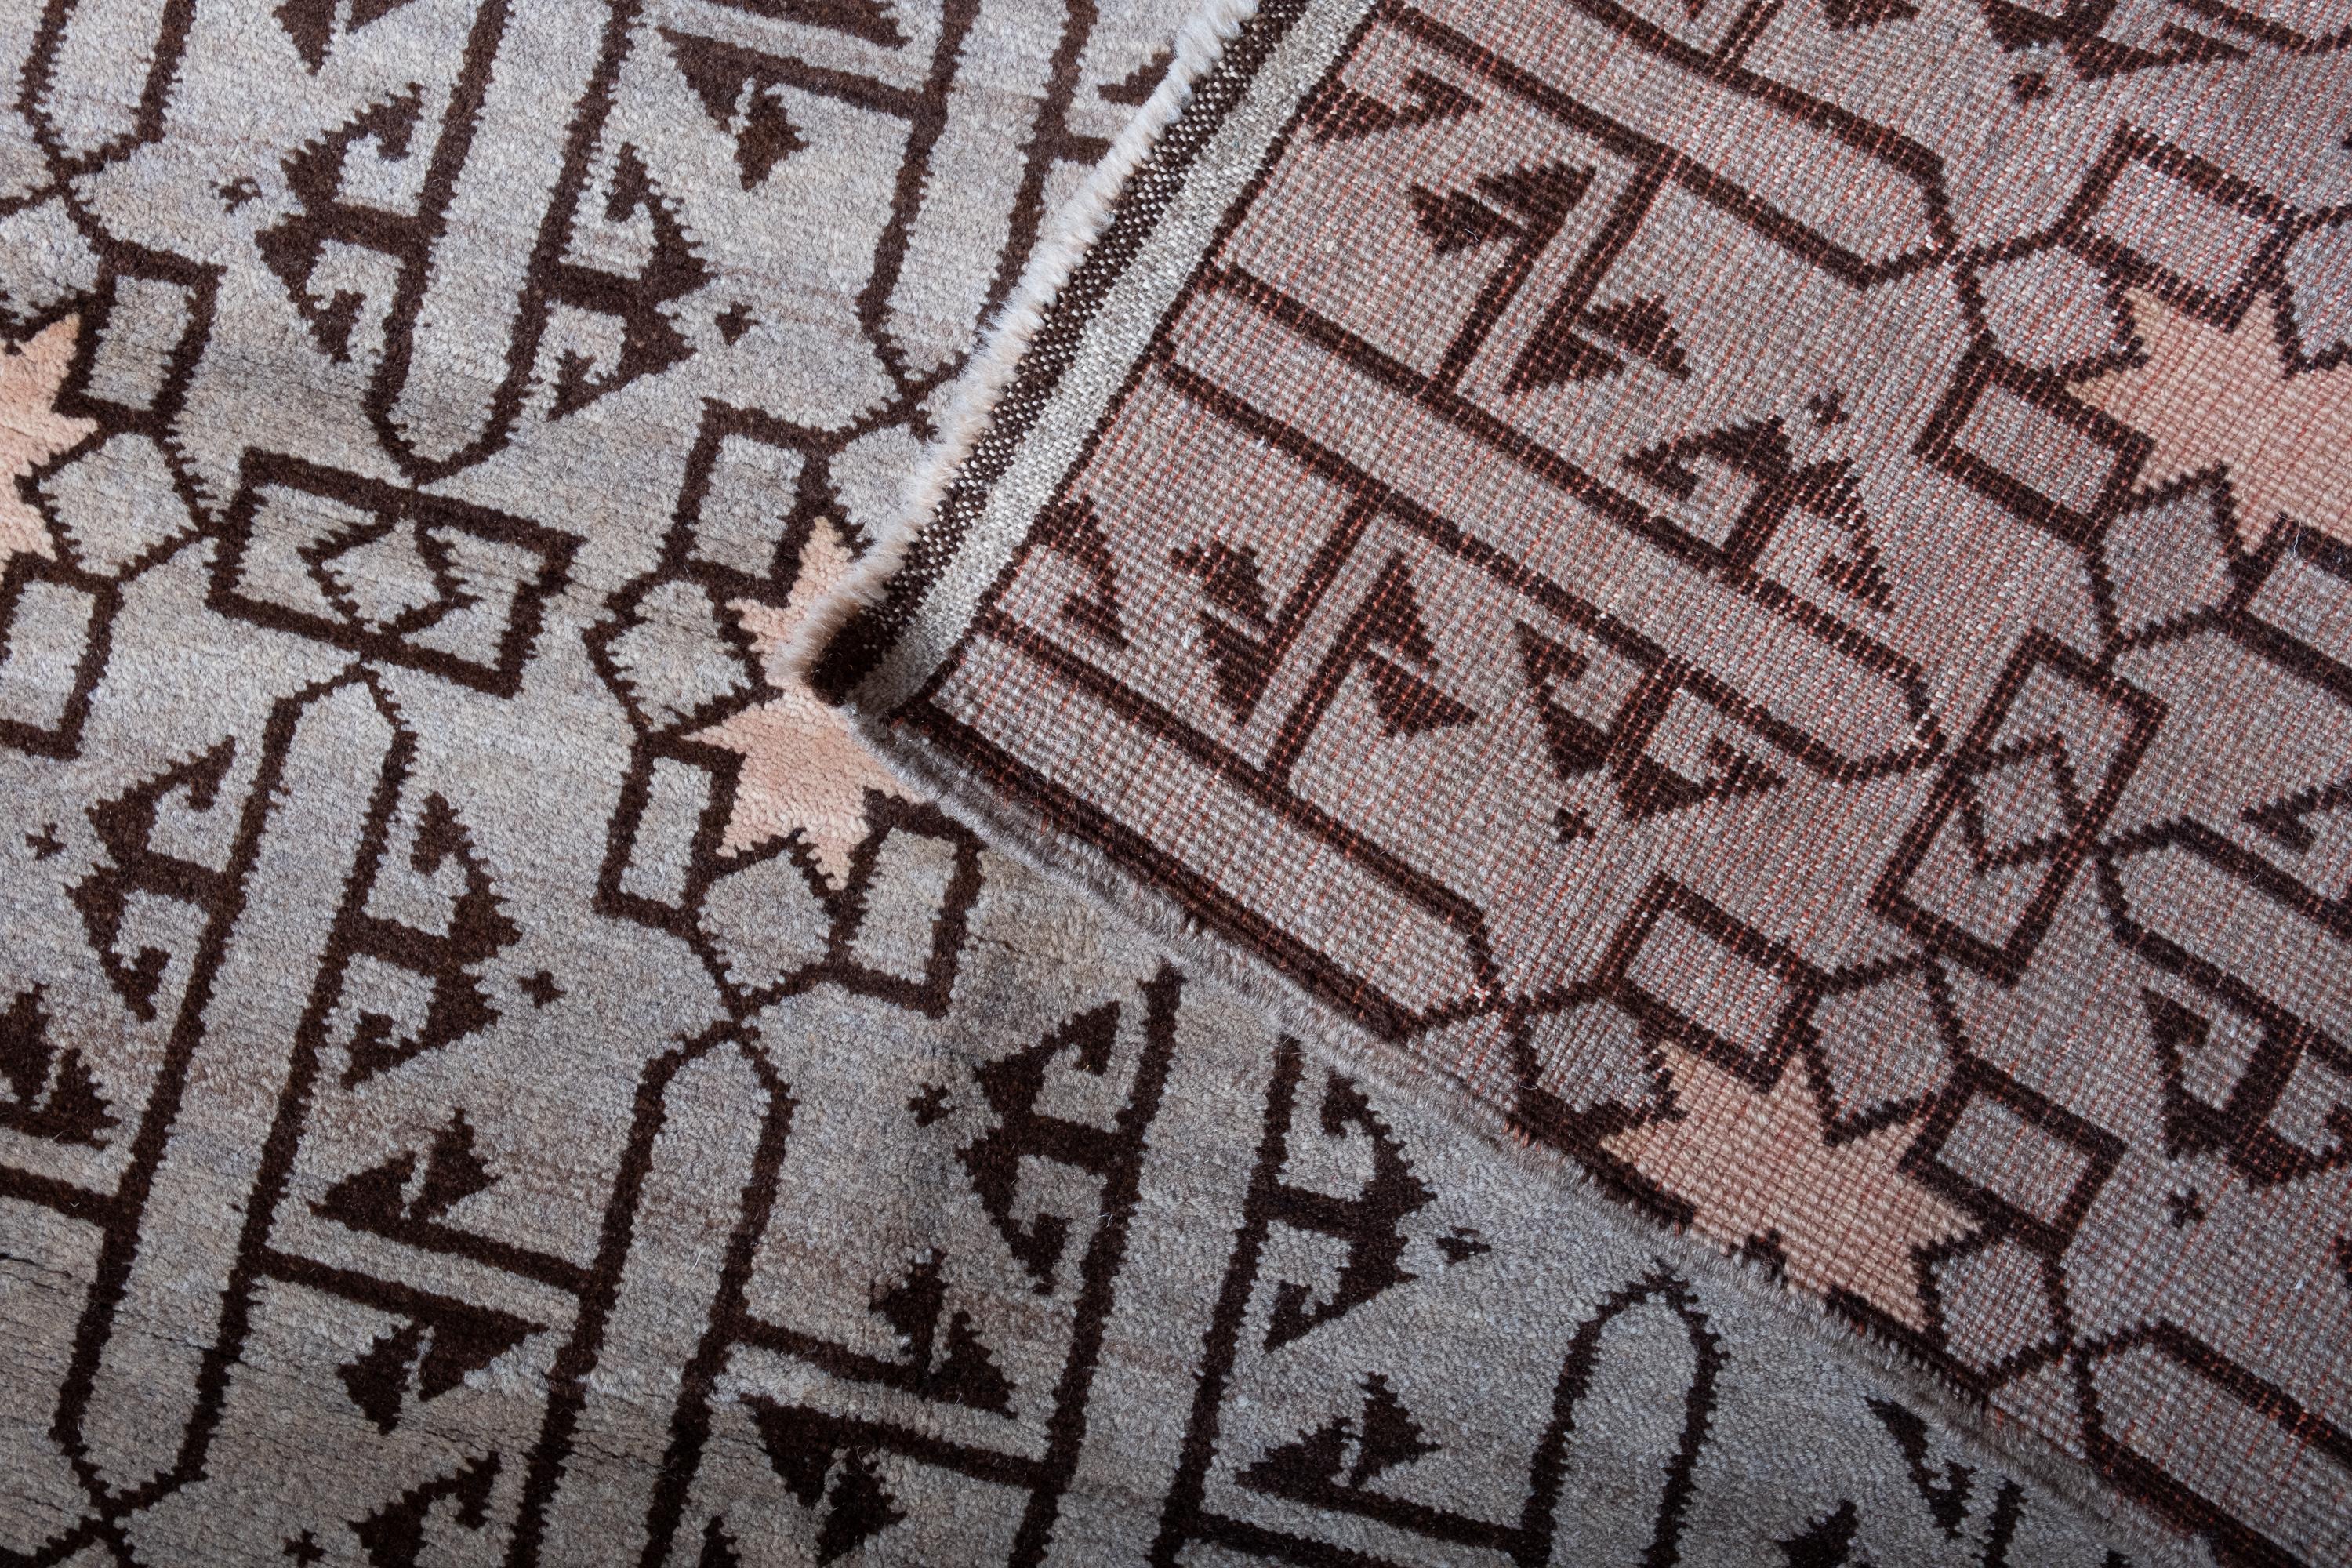 Turkish Ararat Rugs the Alaeddin Mosque Flowers and Stars Lattice Carpet Natural Dye Rug For Sale